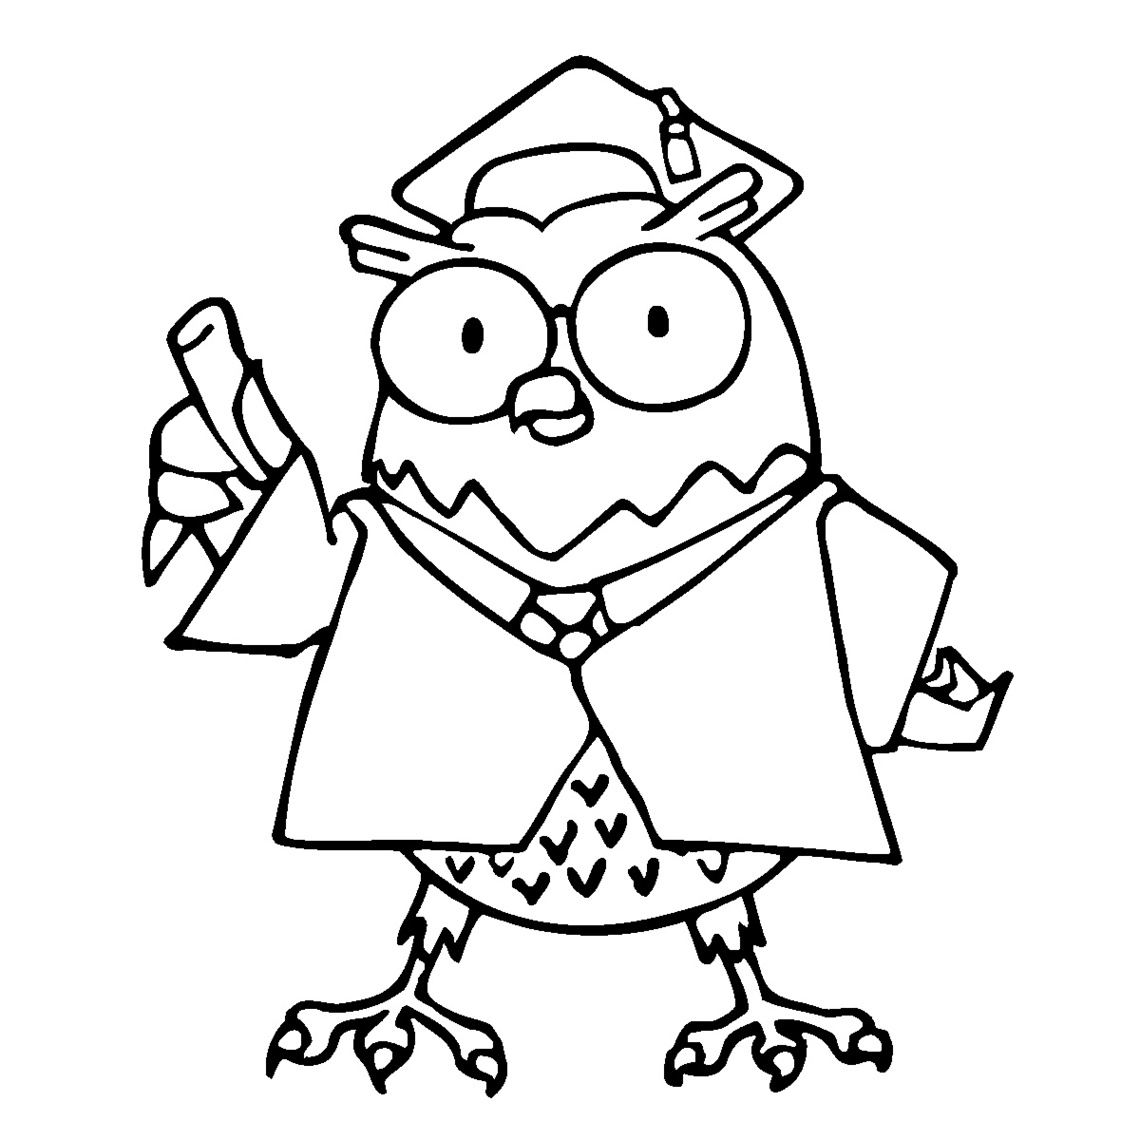 Clip Art Cartoon Professor Owl B&W Clipart - Free to use Clip Art ...